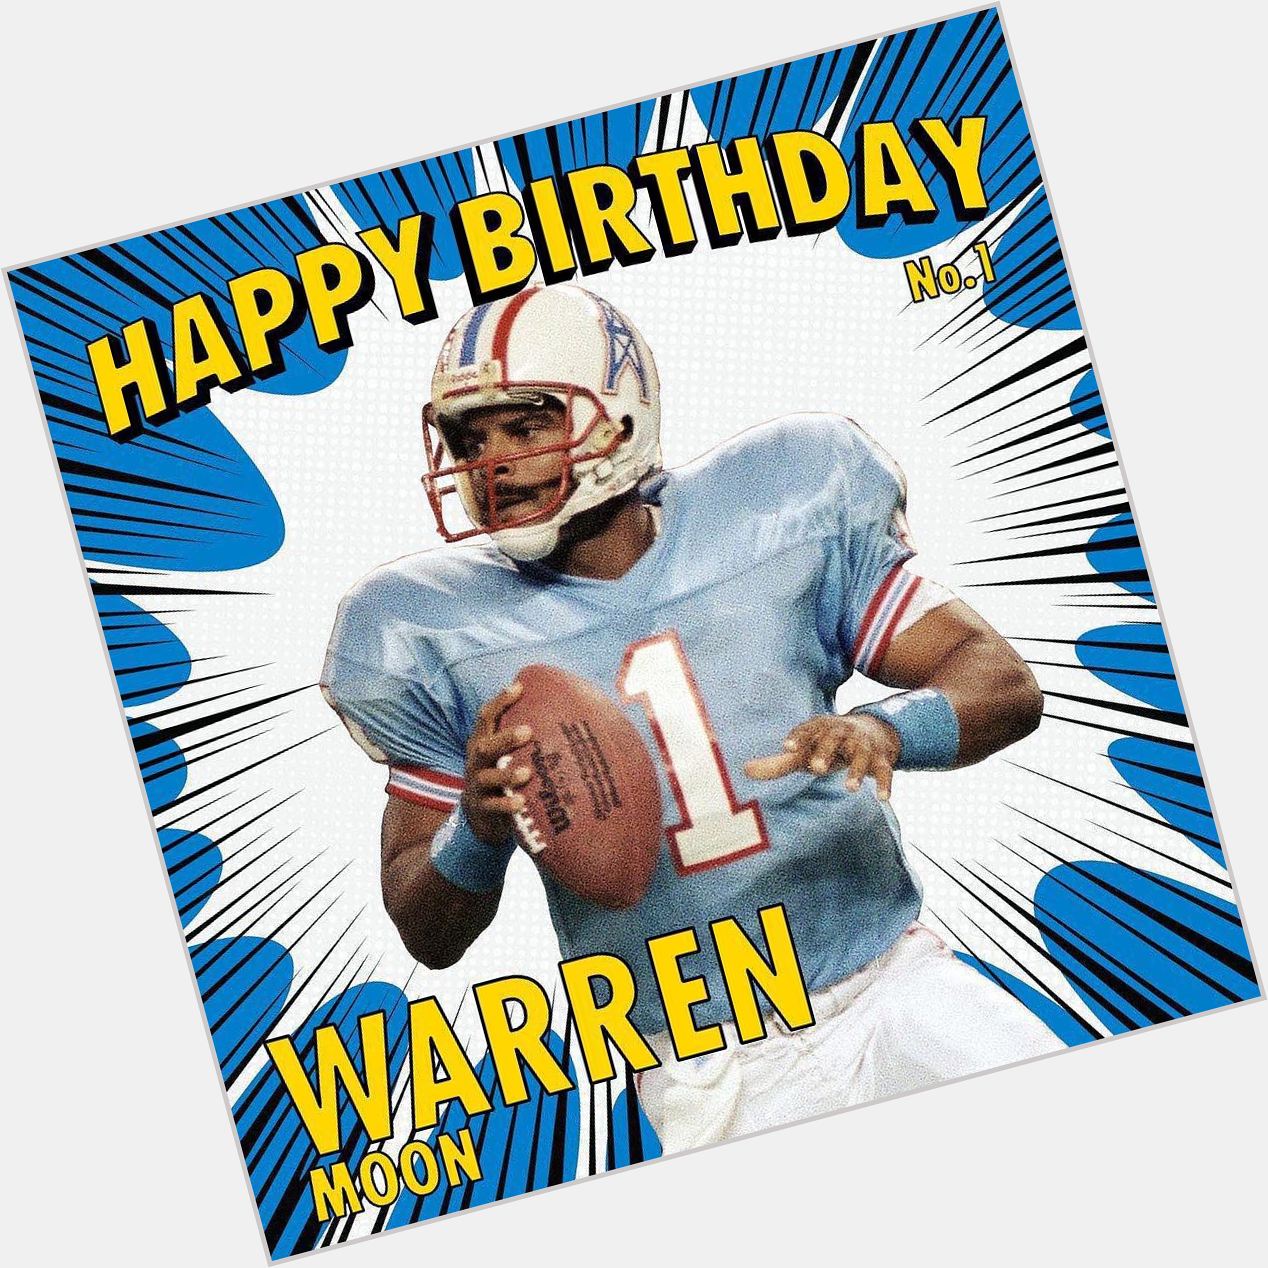 NFL Double-tap to help us wish a Happy Birthday to QB Warren Moon!  